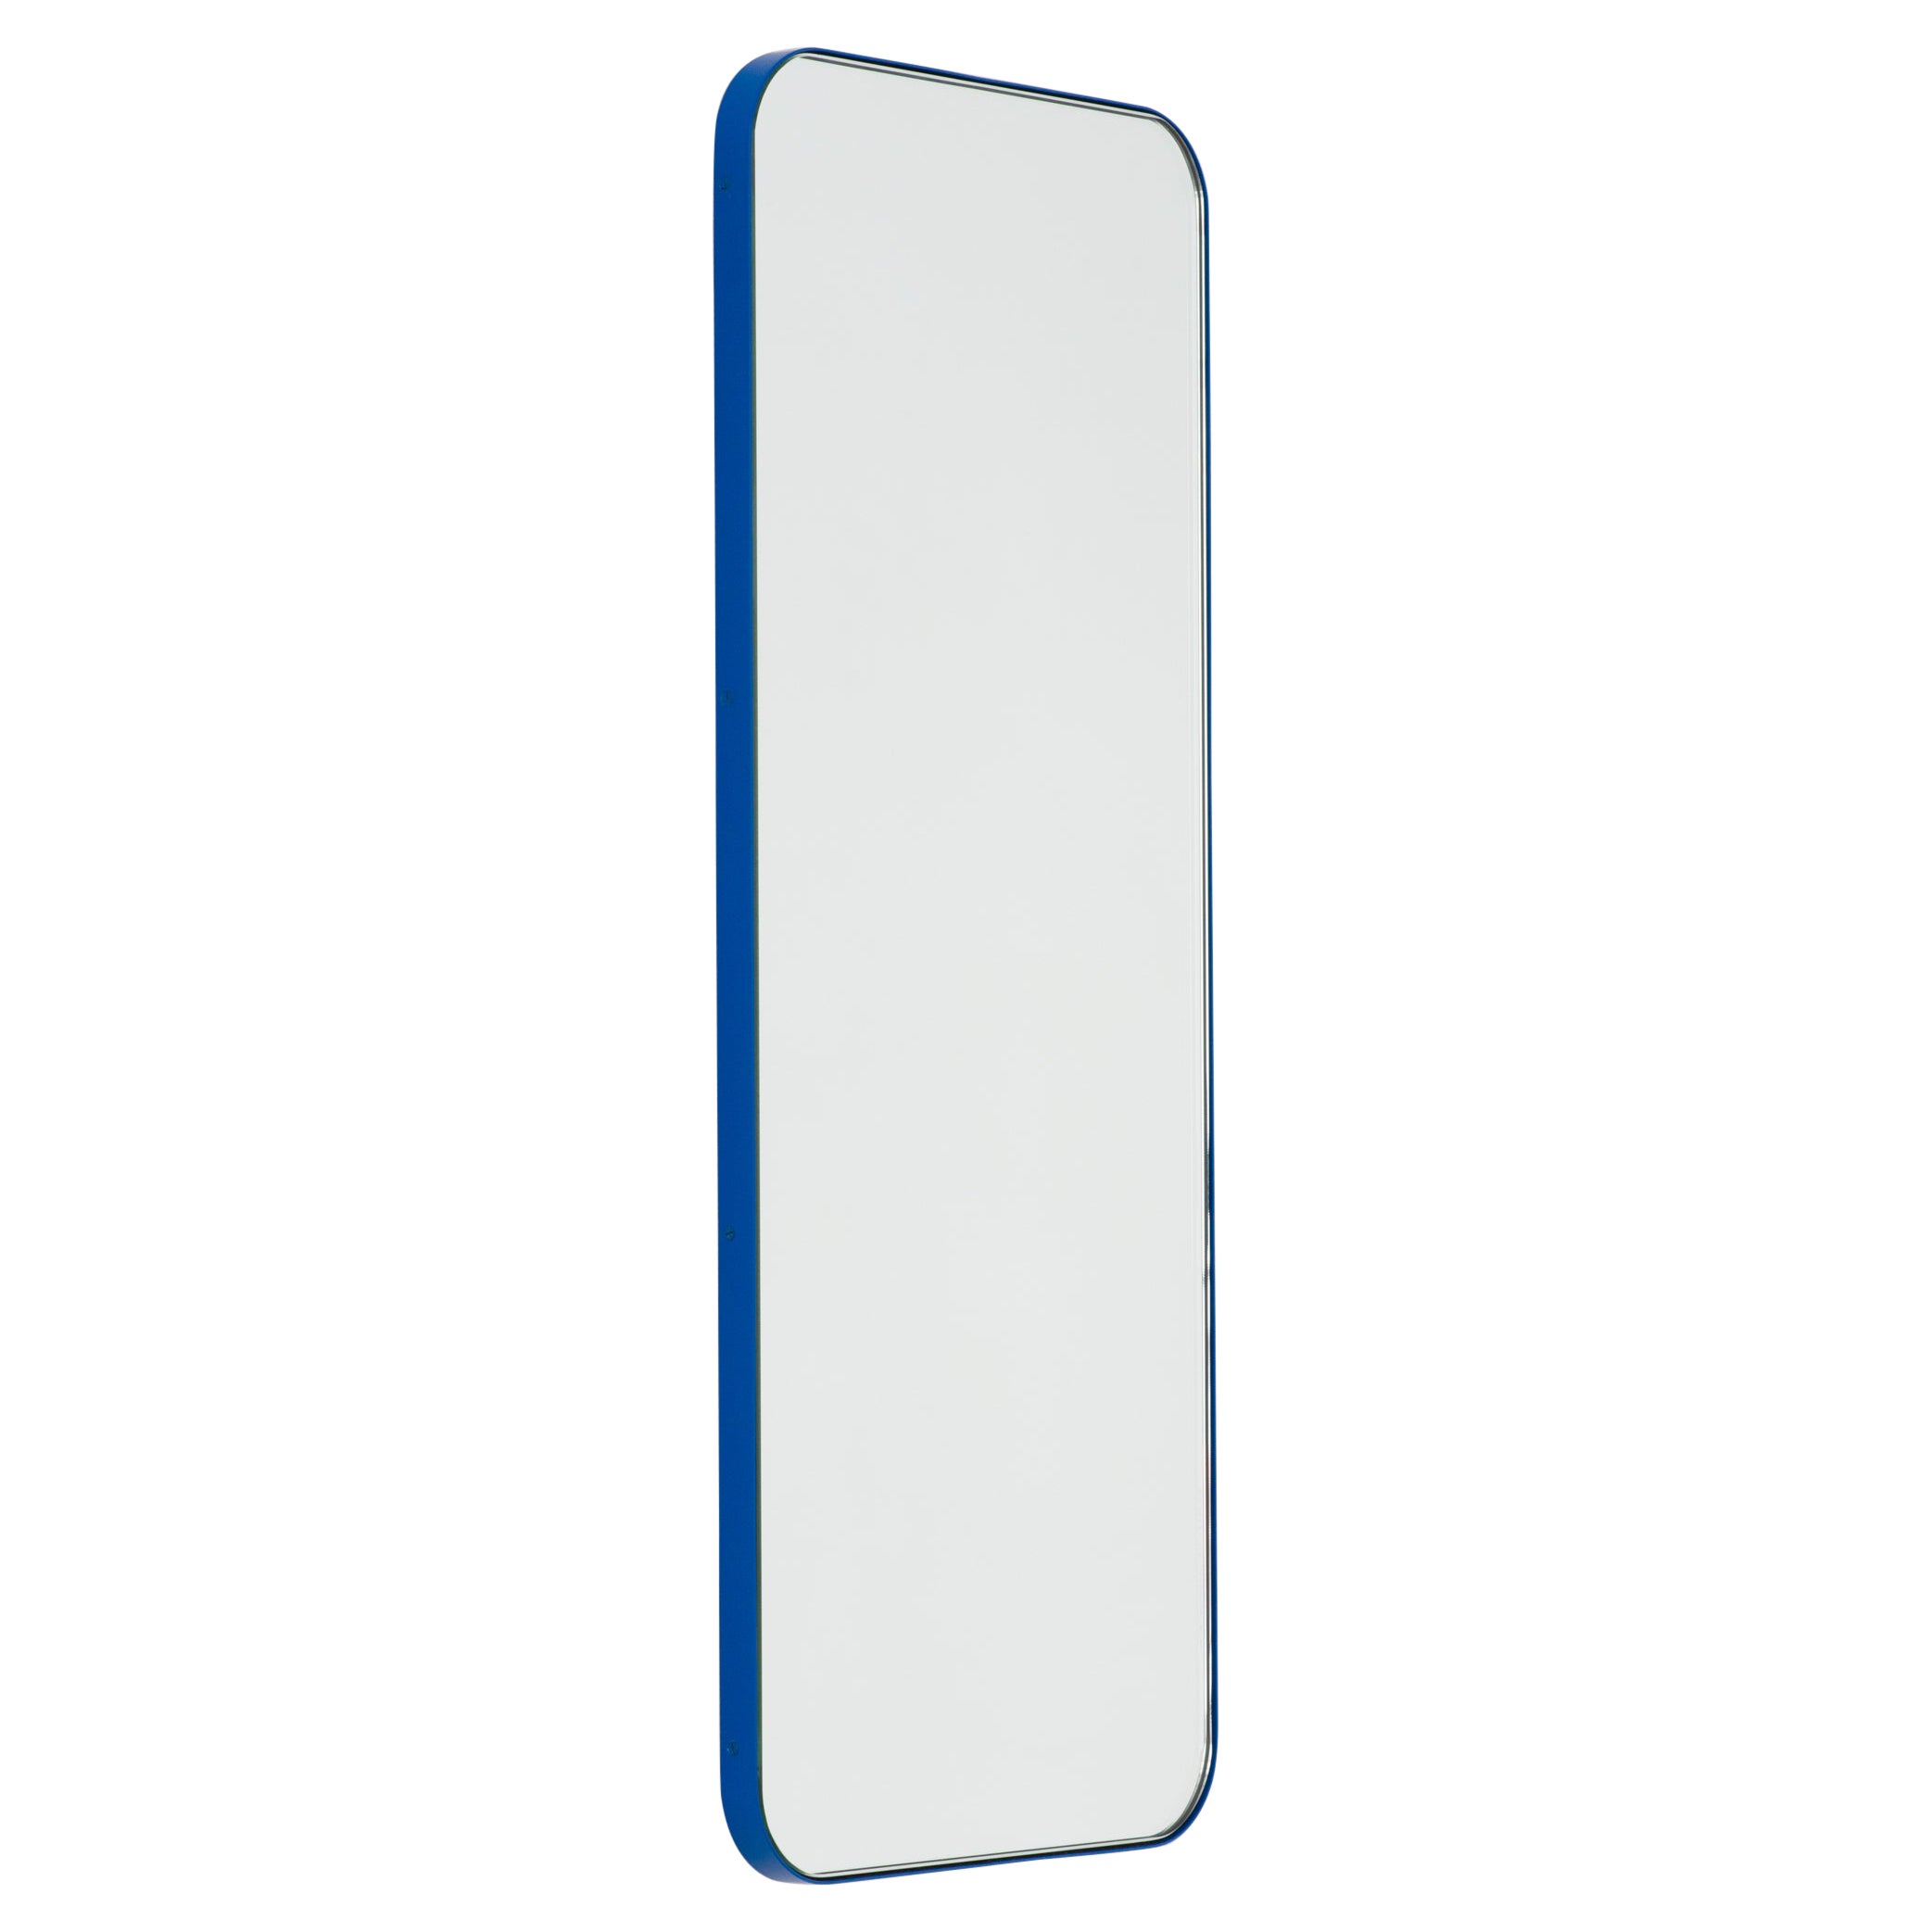 Quadris Rectangular Modern Wall Mirror with a Blue Frame, XL